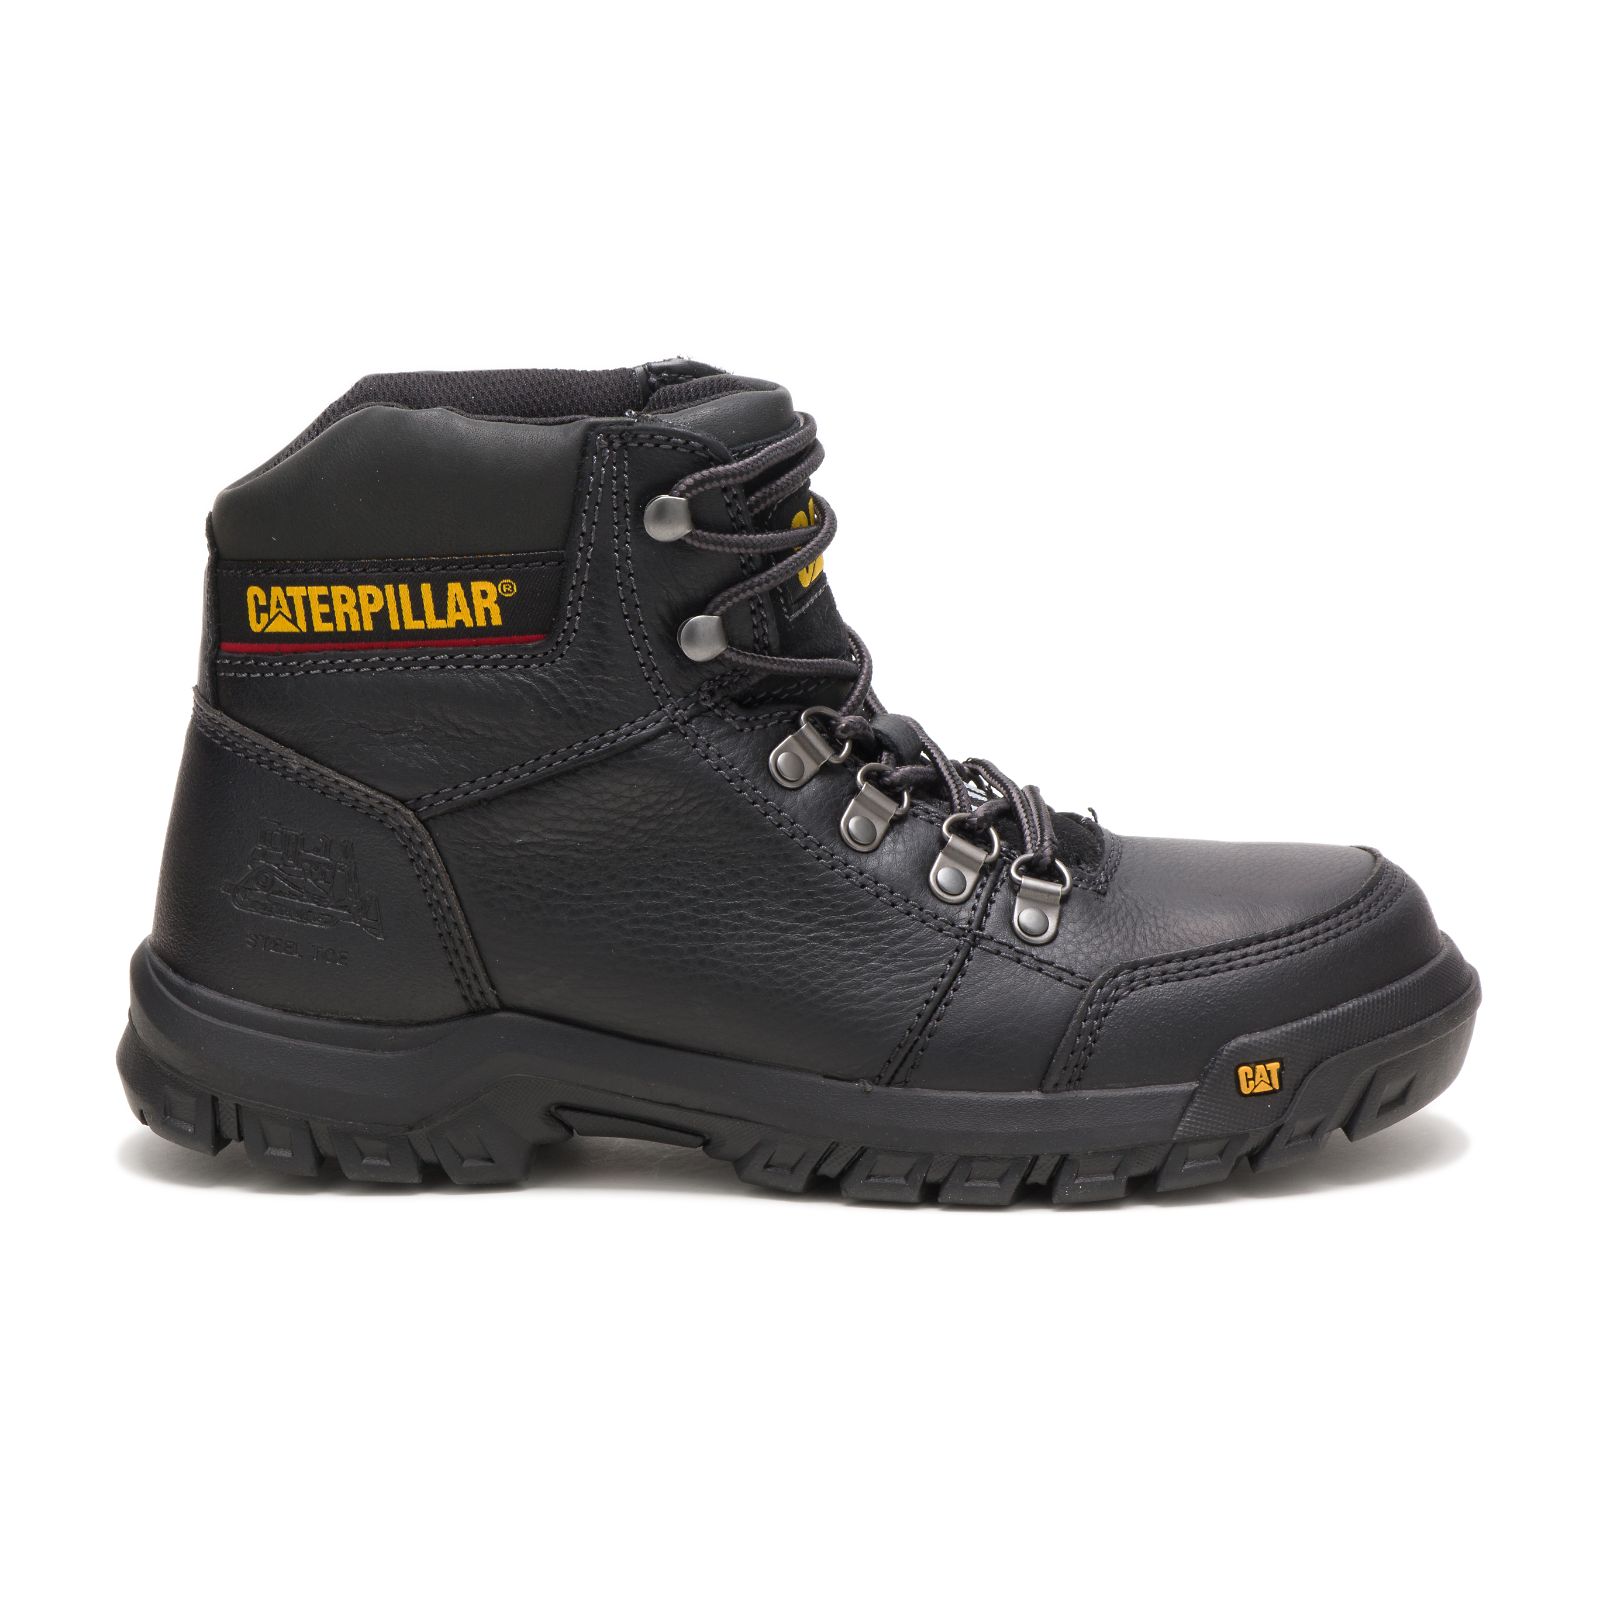 Caterpillar Boots Lahore - Caterpillar Outline Steel Toe Mens Work Boots Black (946825-DKV)